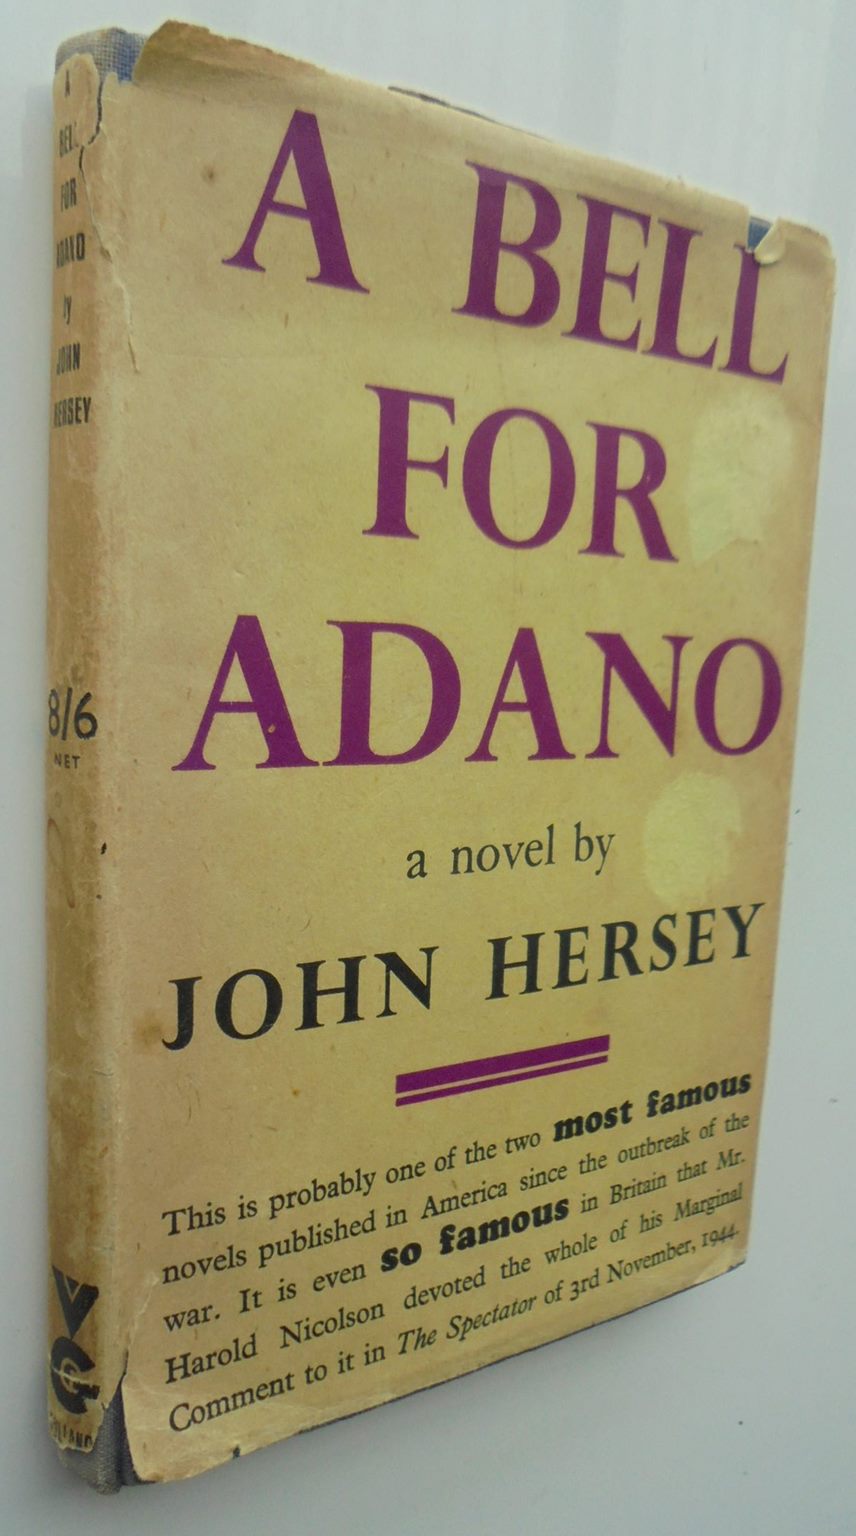 A Bell for Adano. By John Hersey. 1945